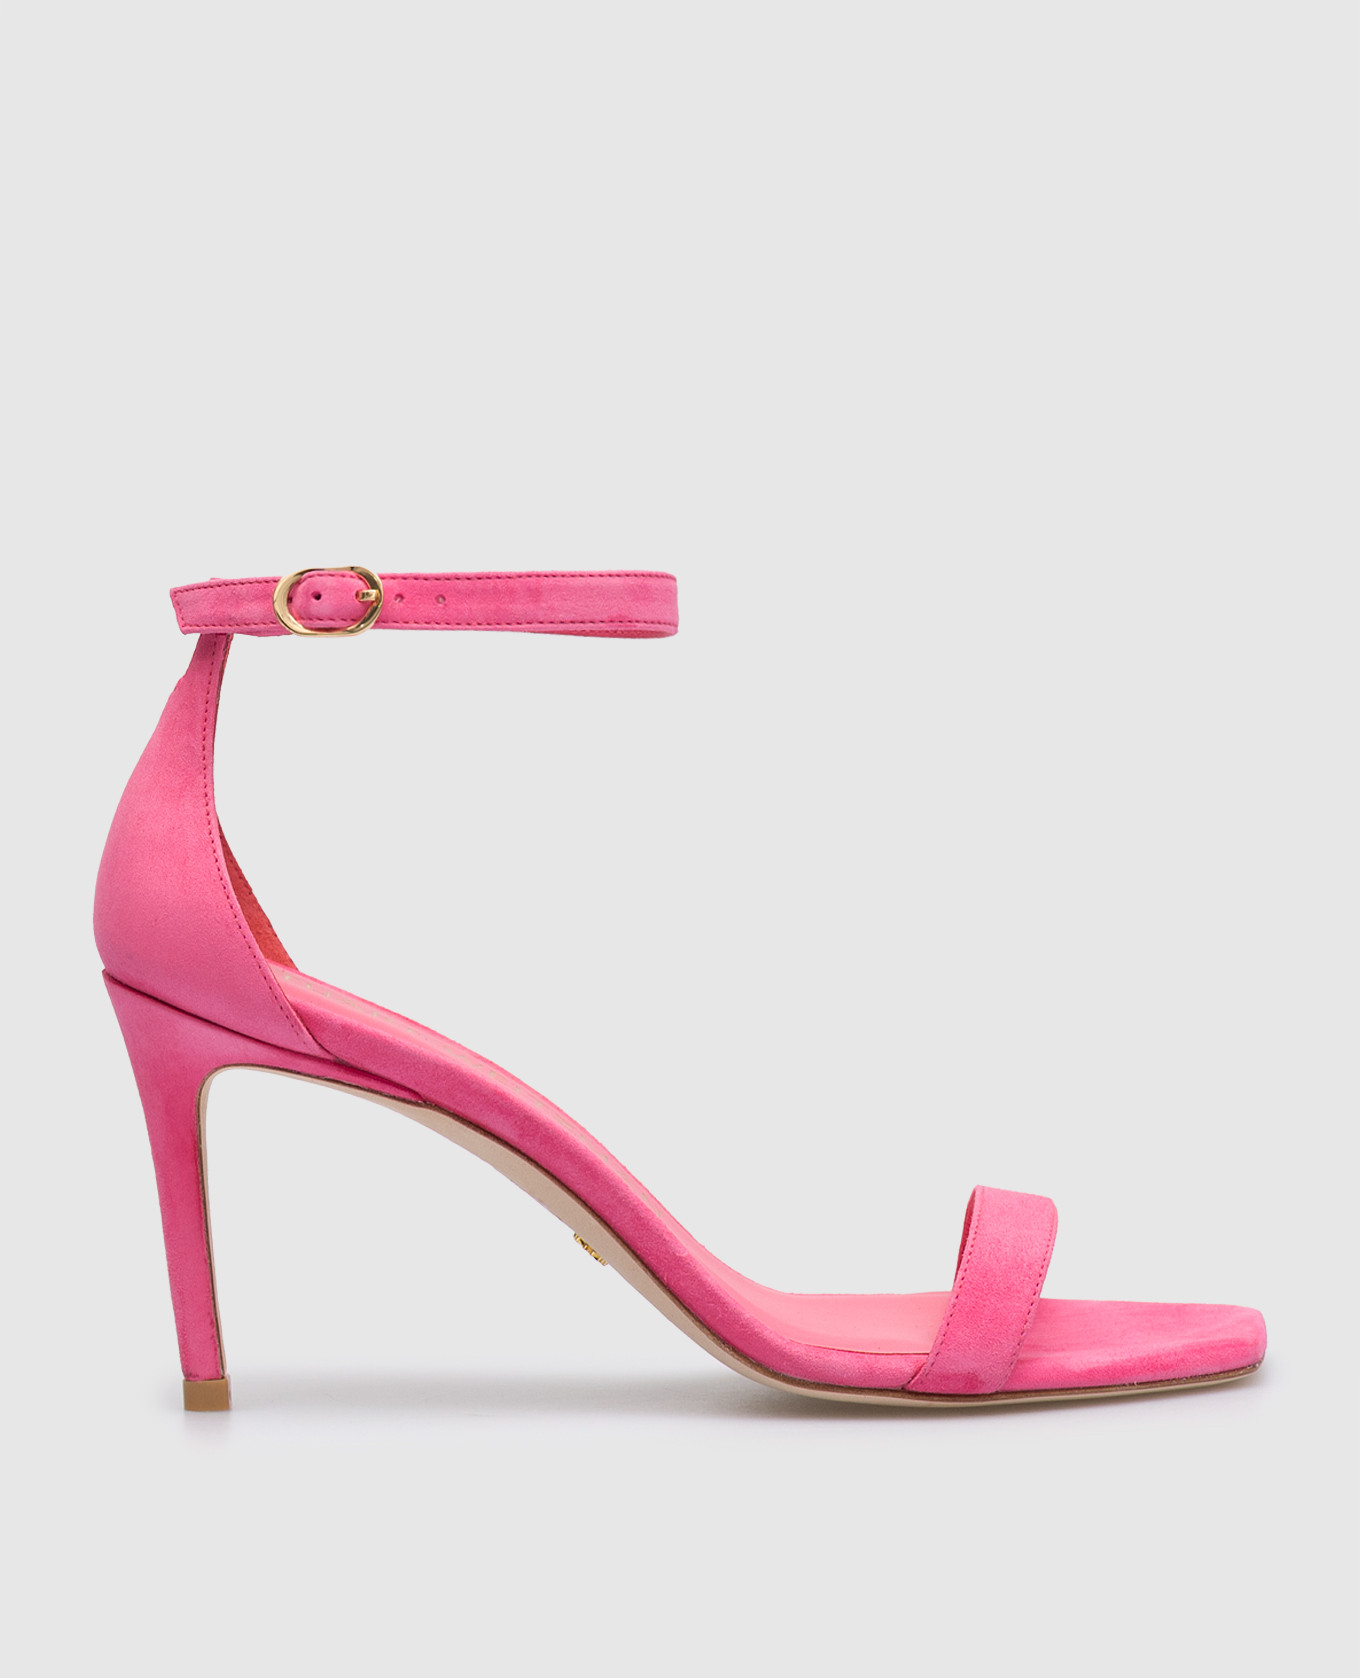 Nunakedcurve 85 pink suede sandals